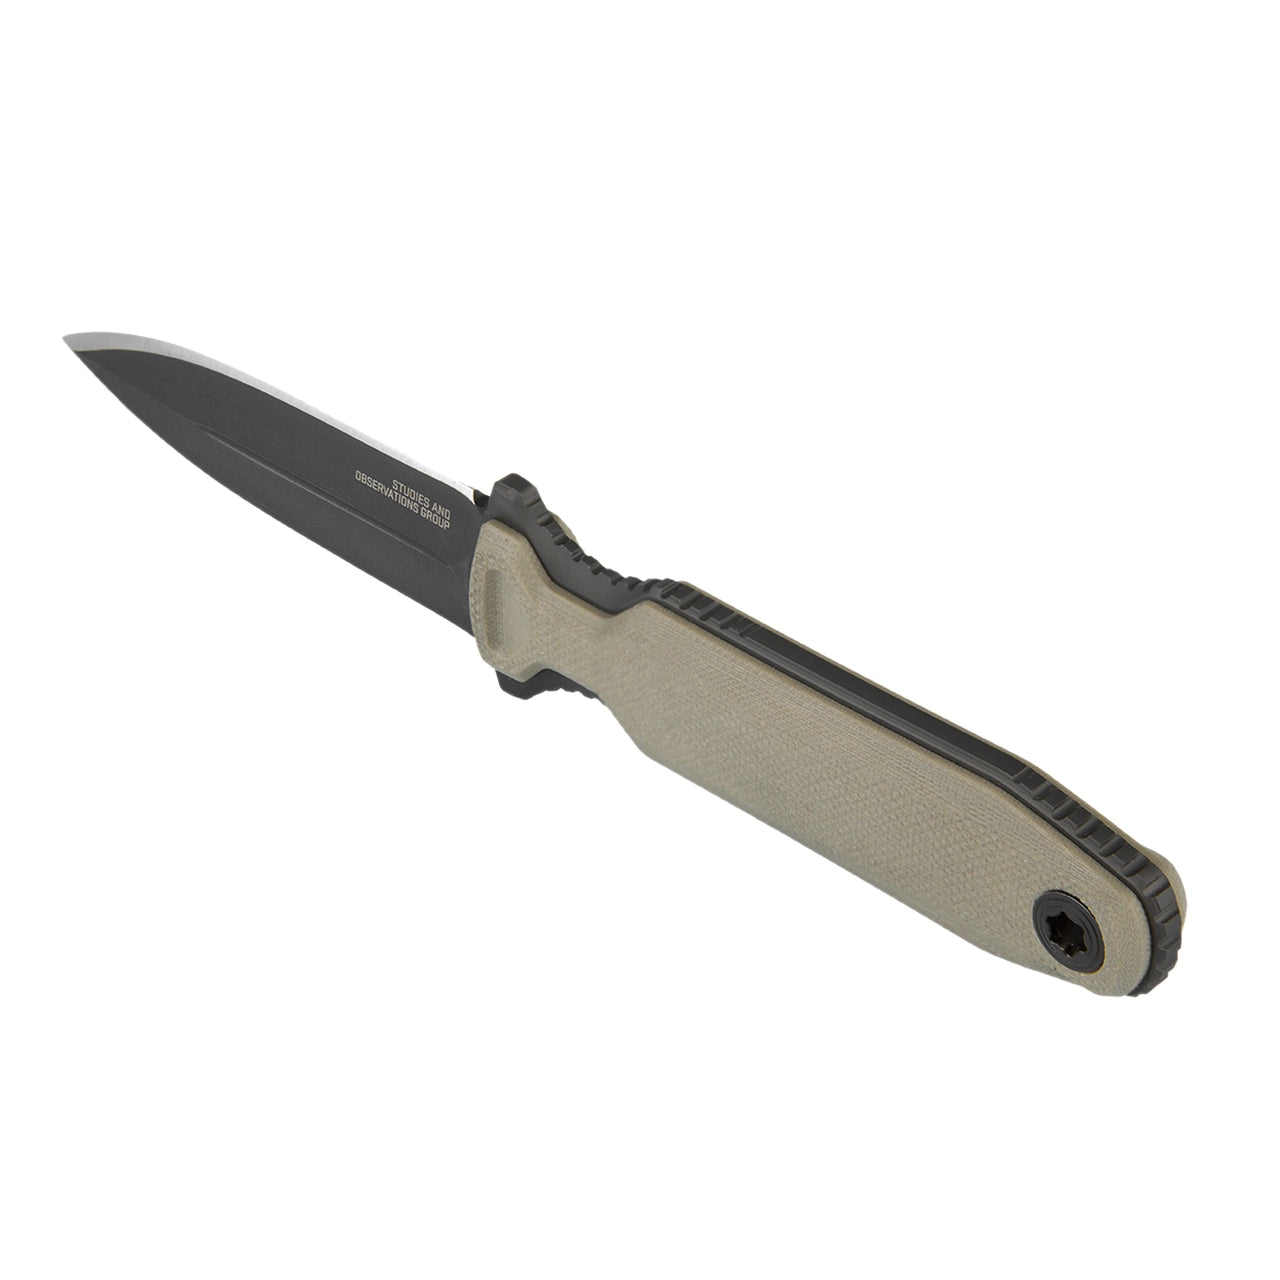 Couteau fixe grand format Pentagon FX - SOG-T.A DEFENSE